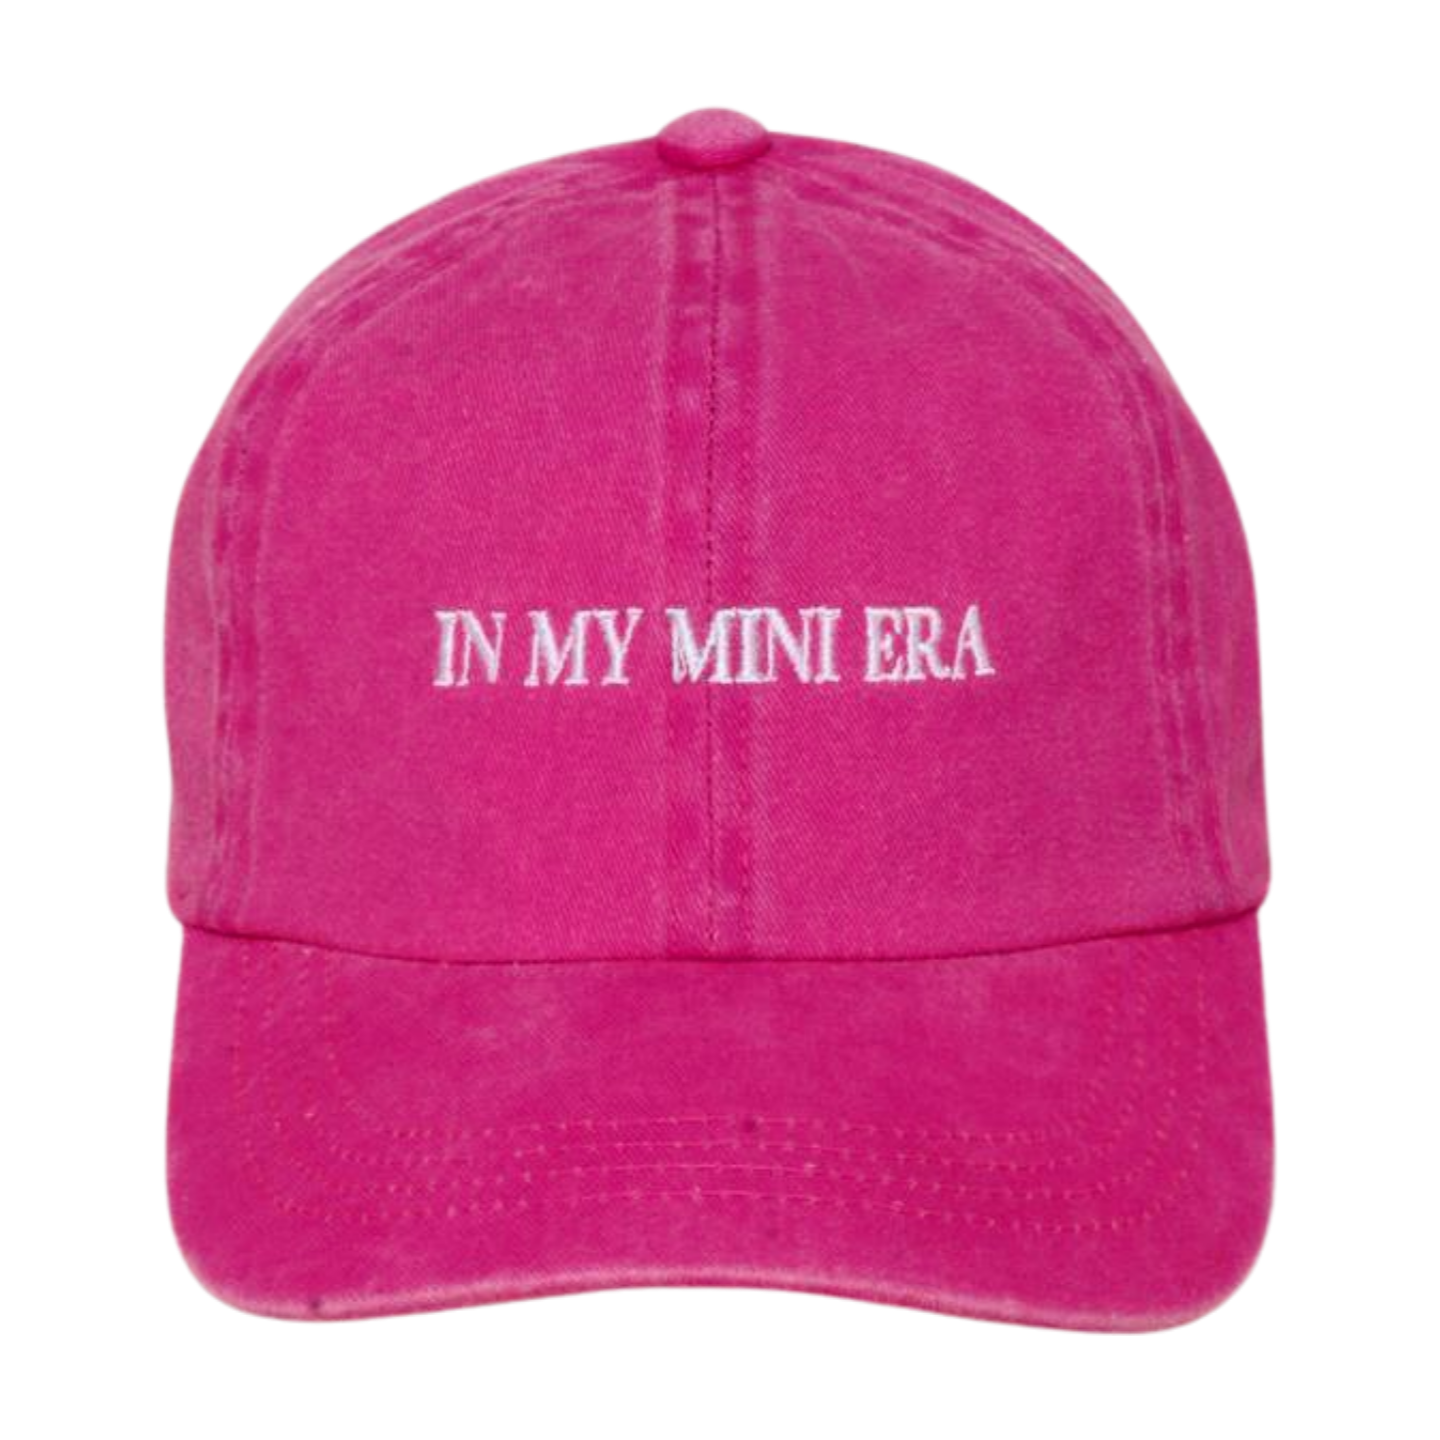 LJRH3435 - "IN MY MINI ERA" KIDS EMBROIDERED BASEBALL CAP